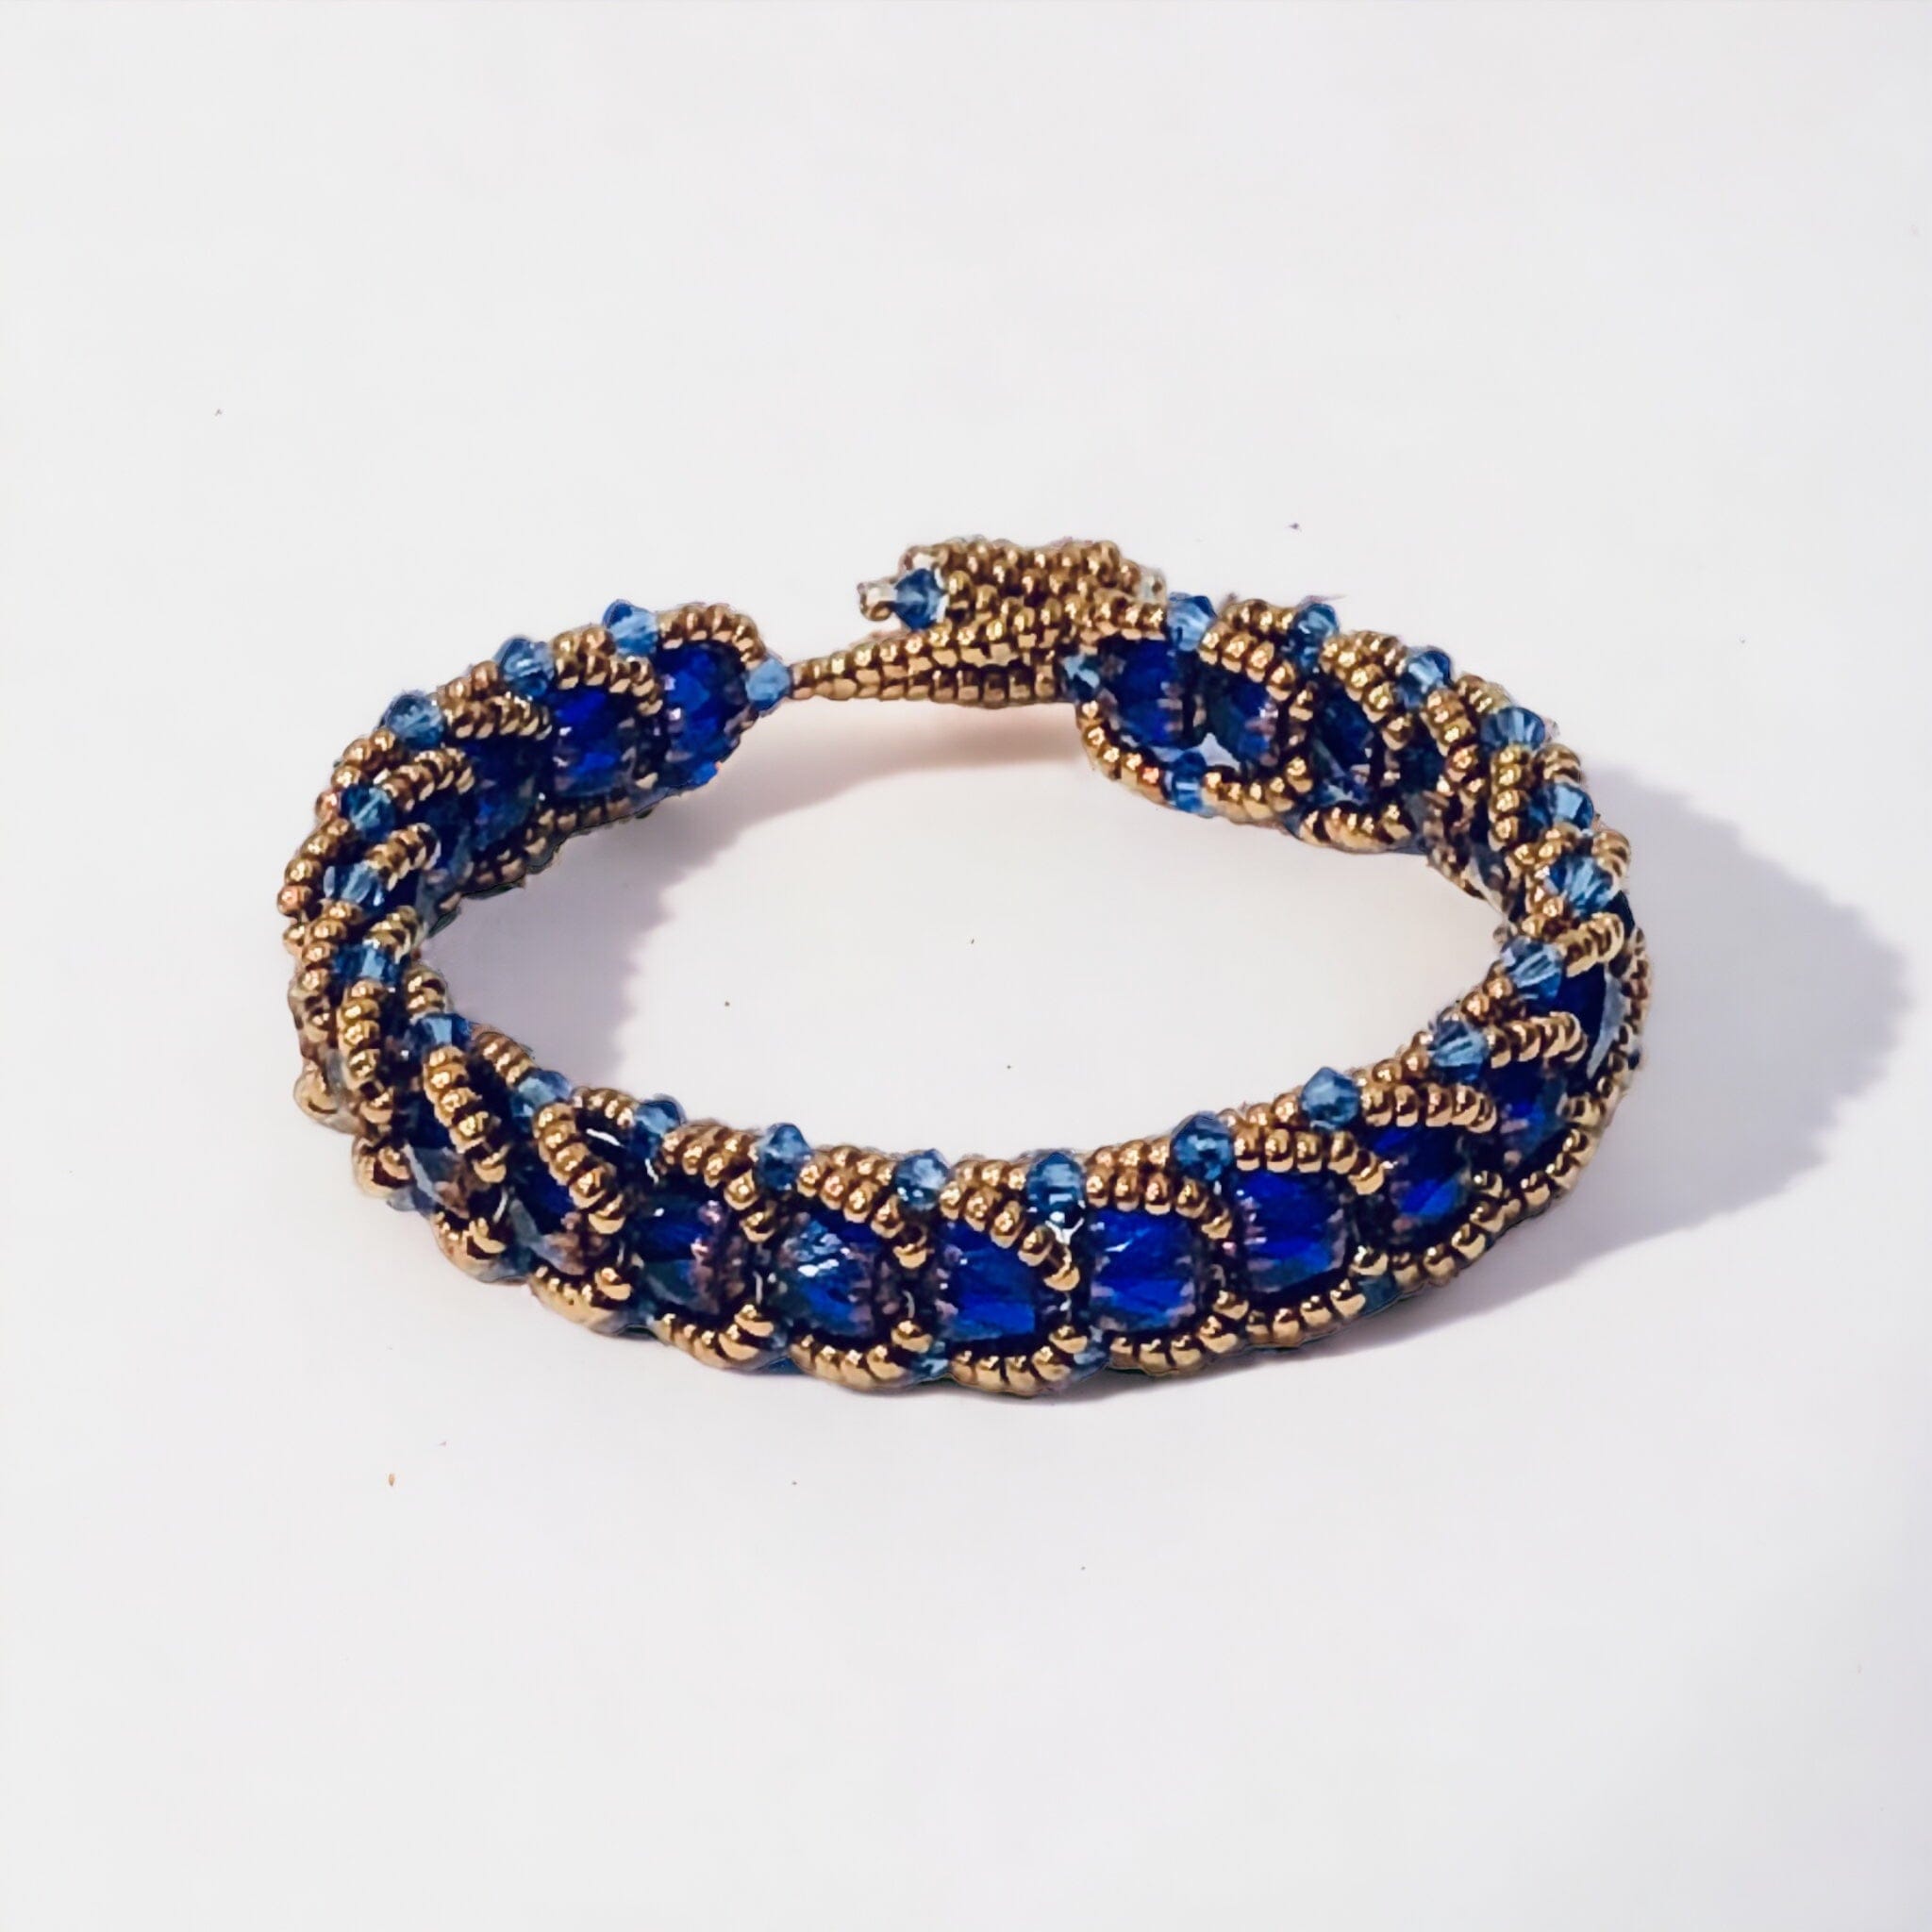 Fayes jewelry designs Bracelet Blue and bronze bead bracelet